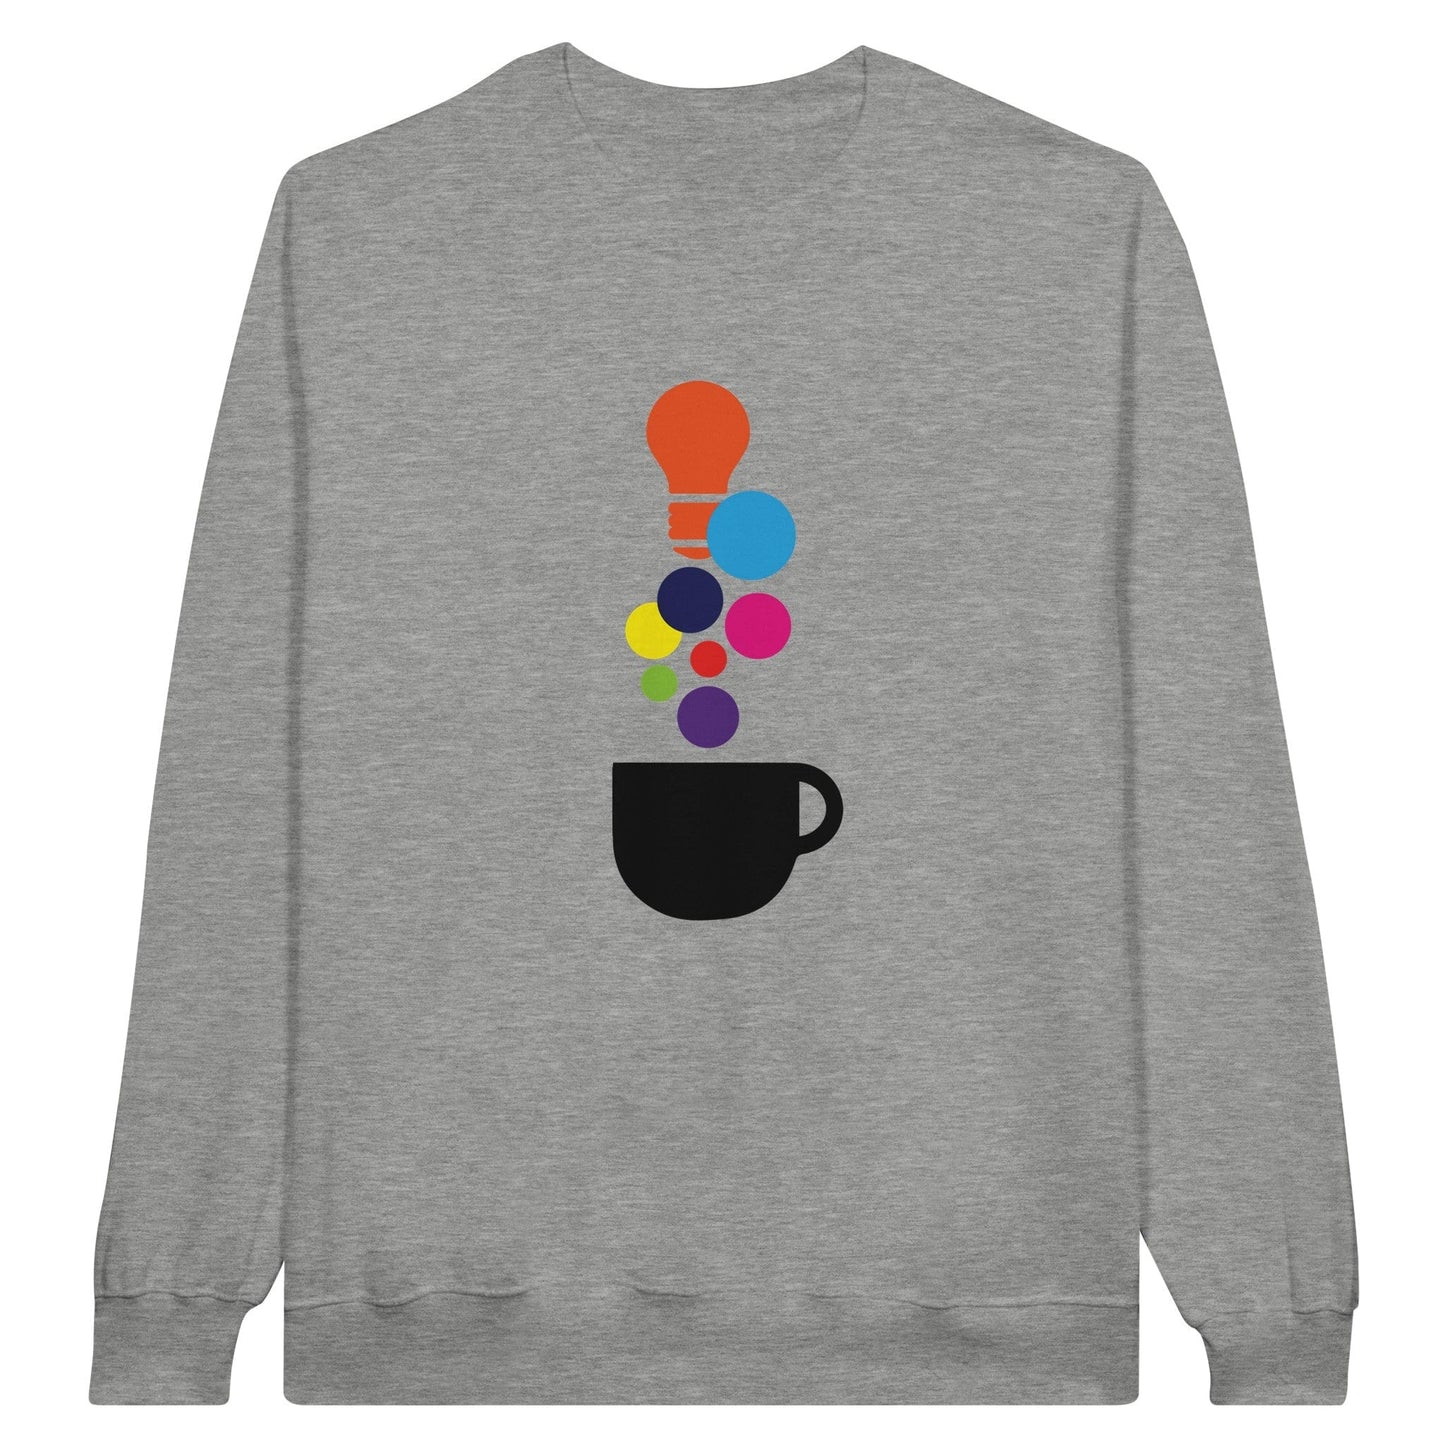 Good Bean Gifts "Creativity in a Cup" - Classic Unisex Crewneck Sweatshirt 5XL / Ash